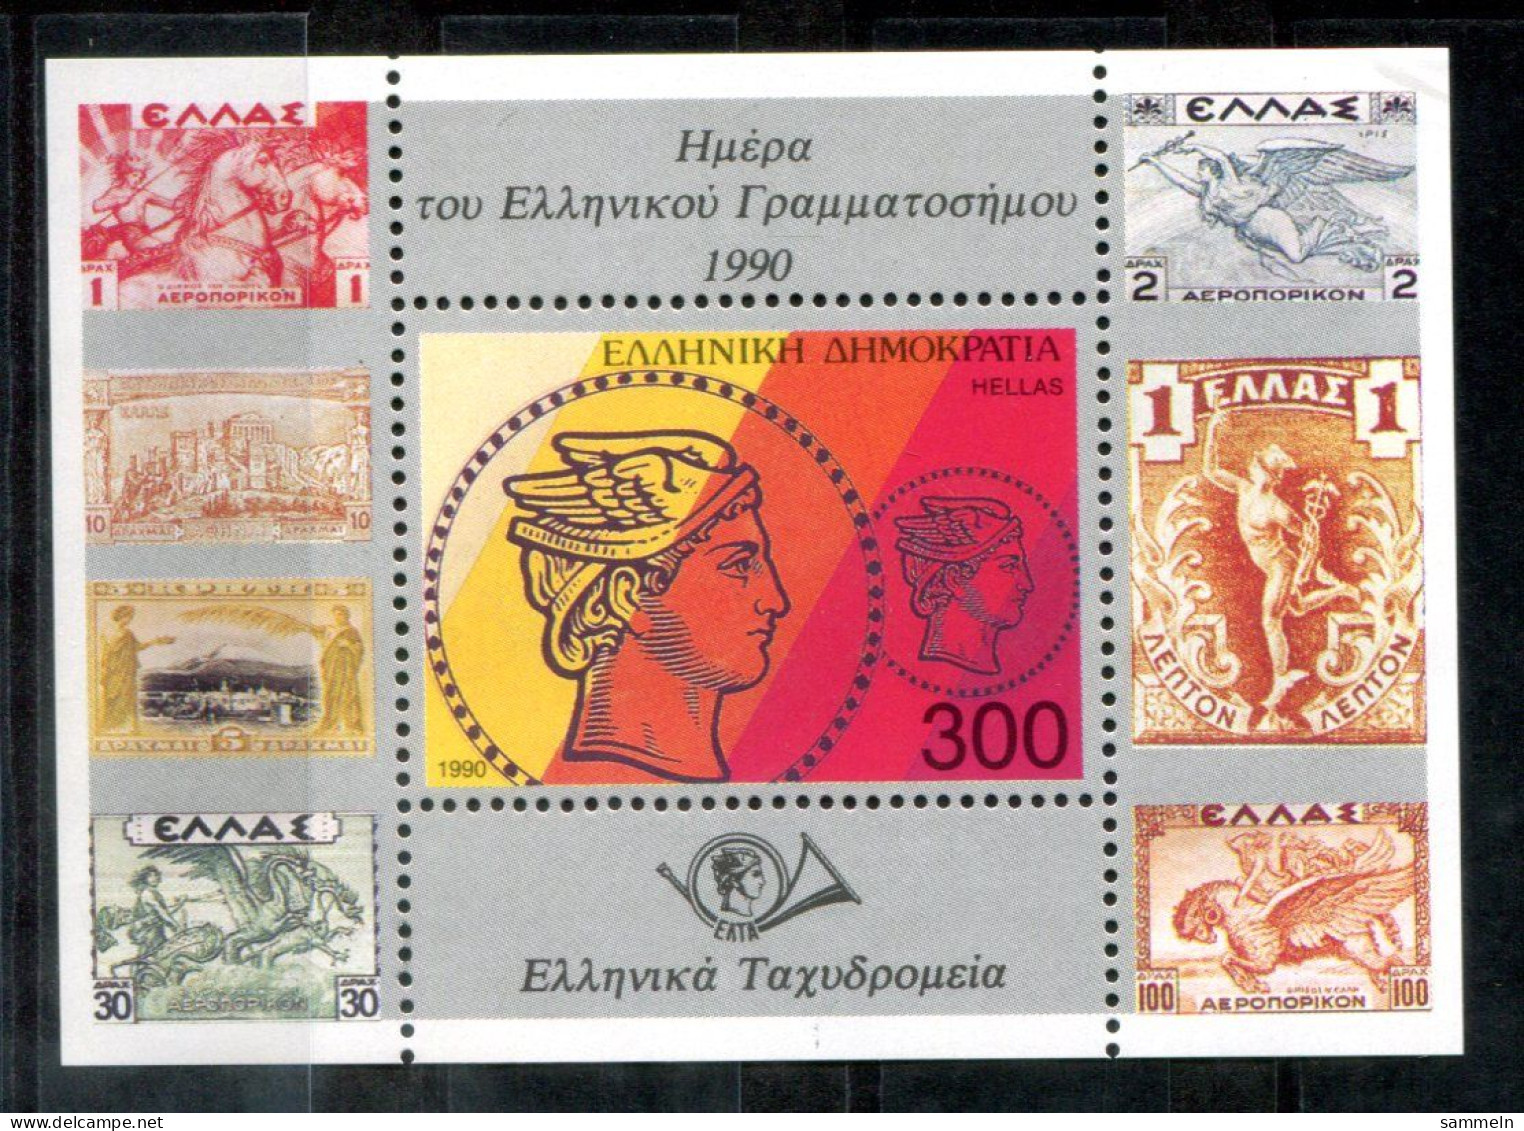 GRIECHENLAND Block 8, Bl.8 Mnh - Marke Auf Marke, Stamp On Stamp, Timbre Sur Timbre - GREECE / GRÈCE - Blocks & Sheetlets